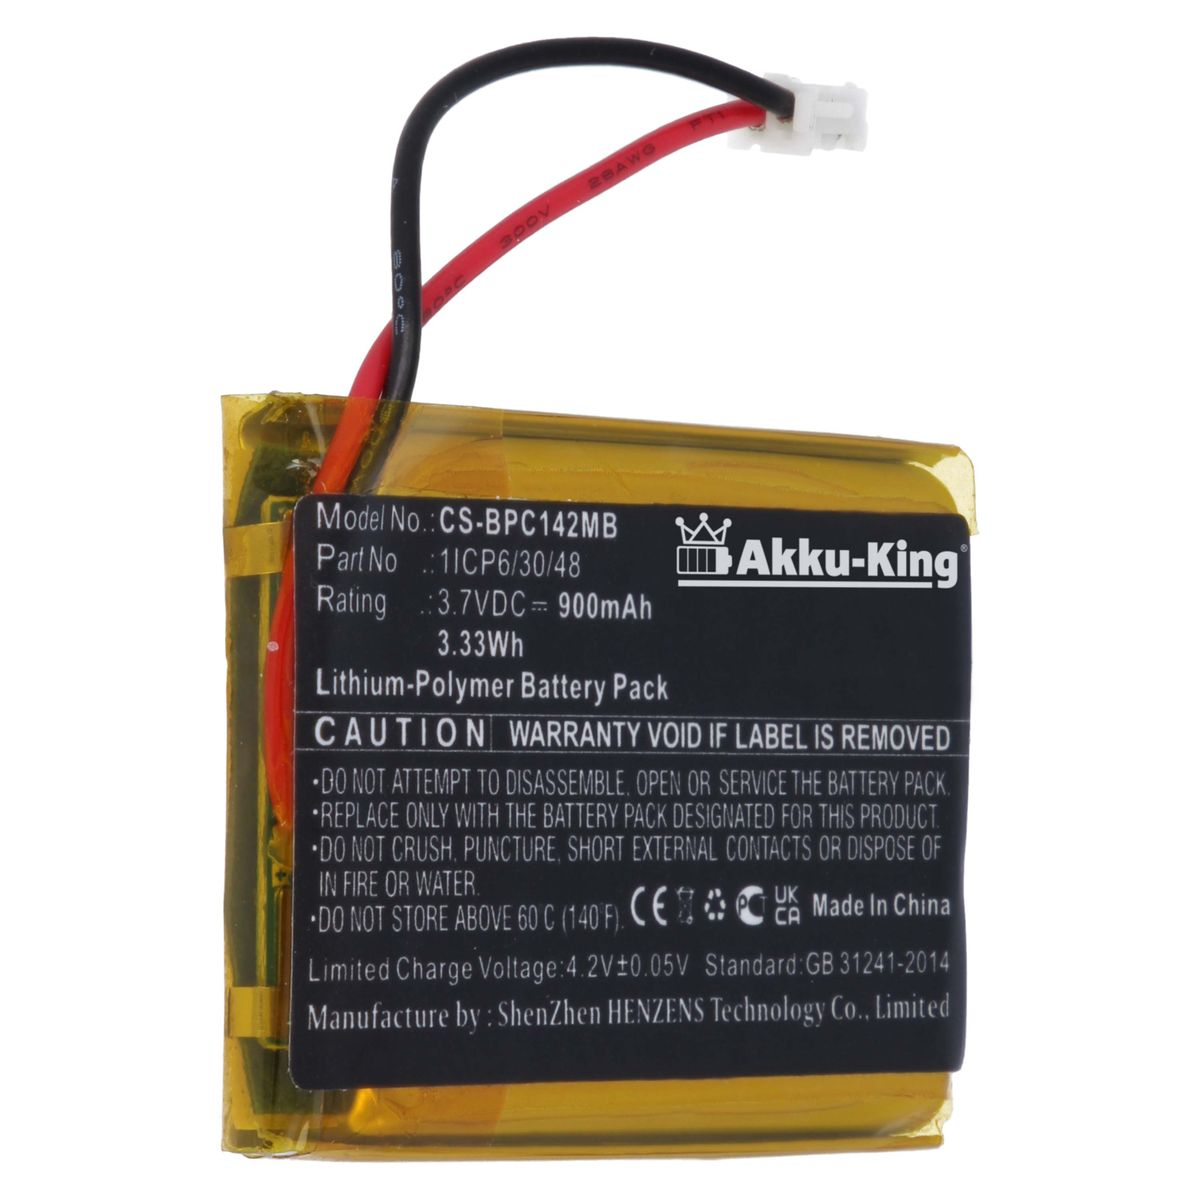 AKKU-KING Akku kompatibel mit 3.7 Volt, Li-Polymer Babymoov 900mAh 1ICP6/30/48 Geräte-Akku